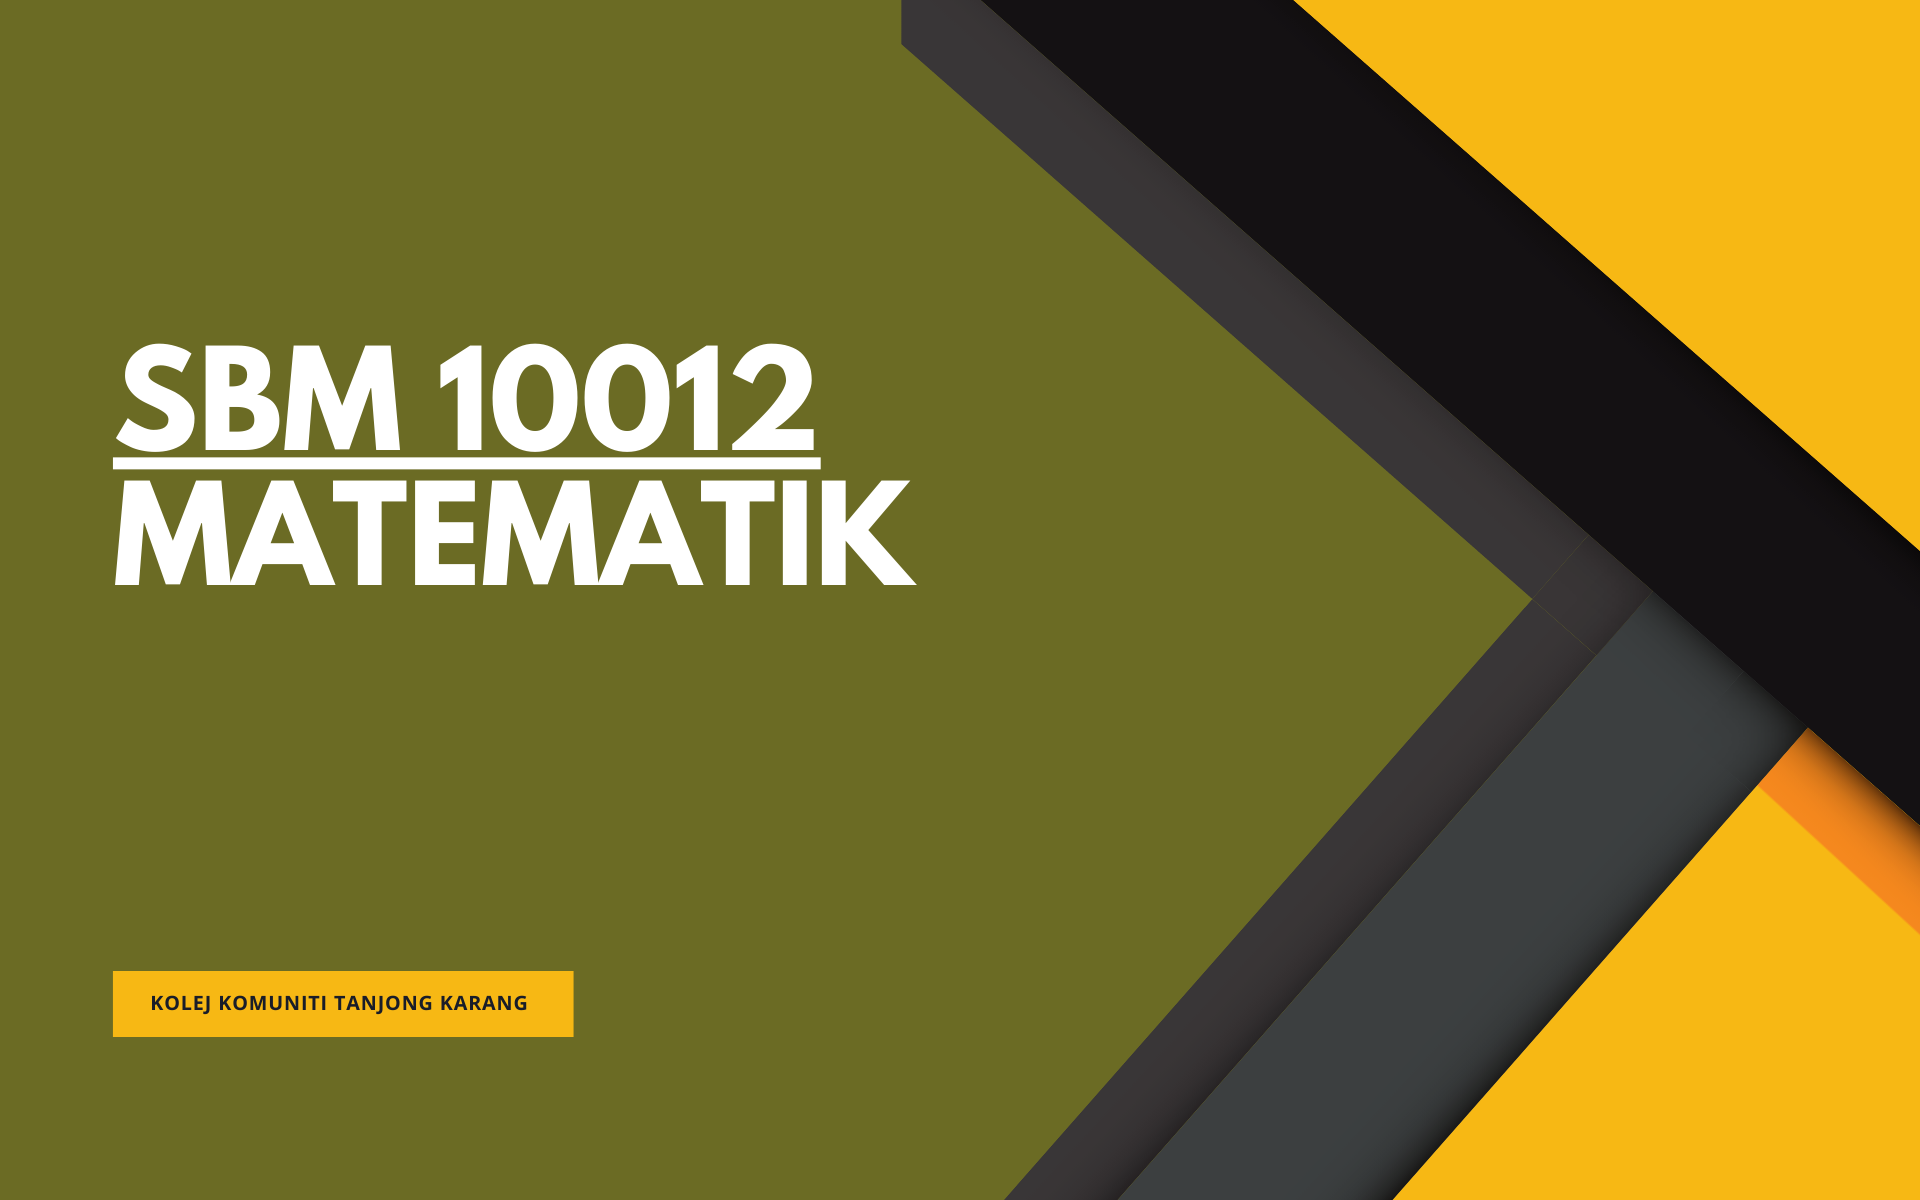 KKTK SBM 10012 MATEMATIK